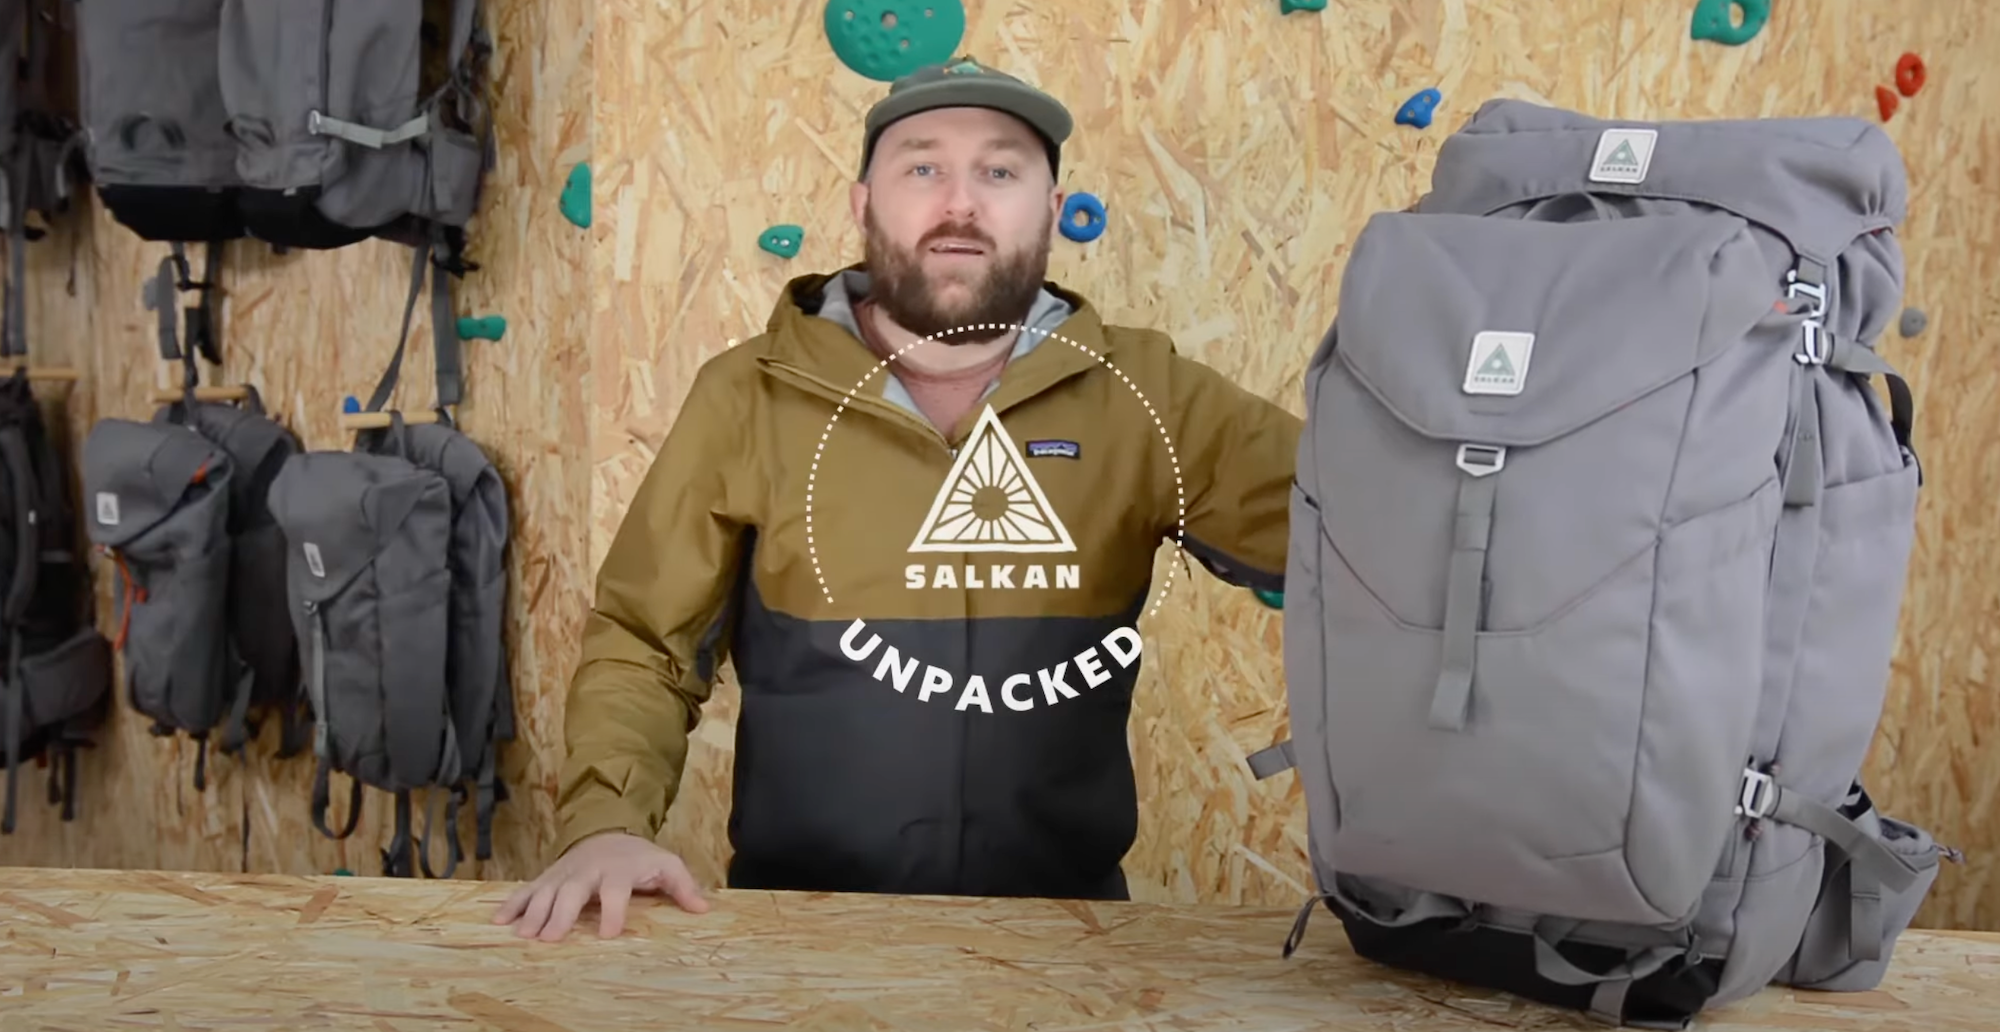 Load video: Backpack Walkthrough Video